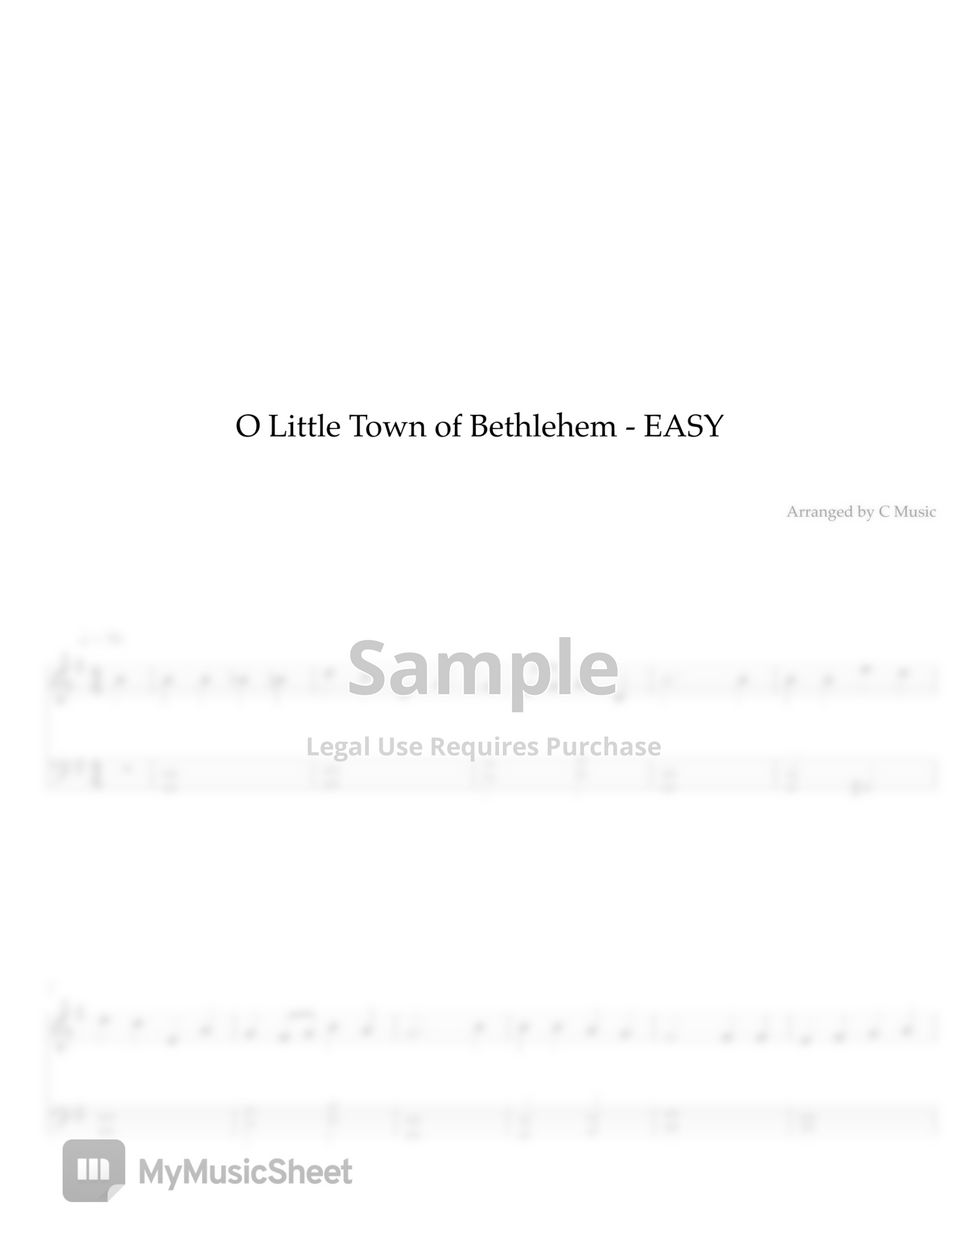 Phillips Brooks - O Little Town of Bethlehem (Easy Version) by C Music